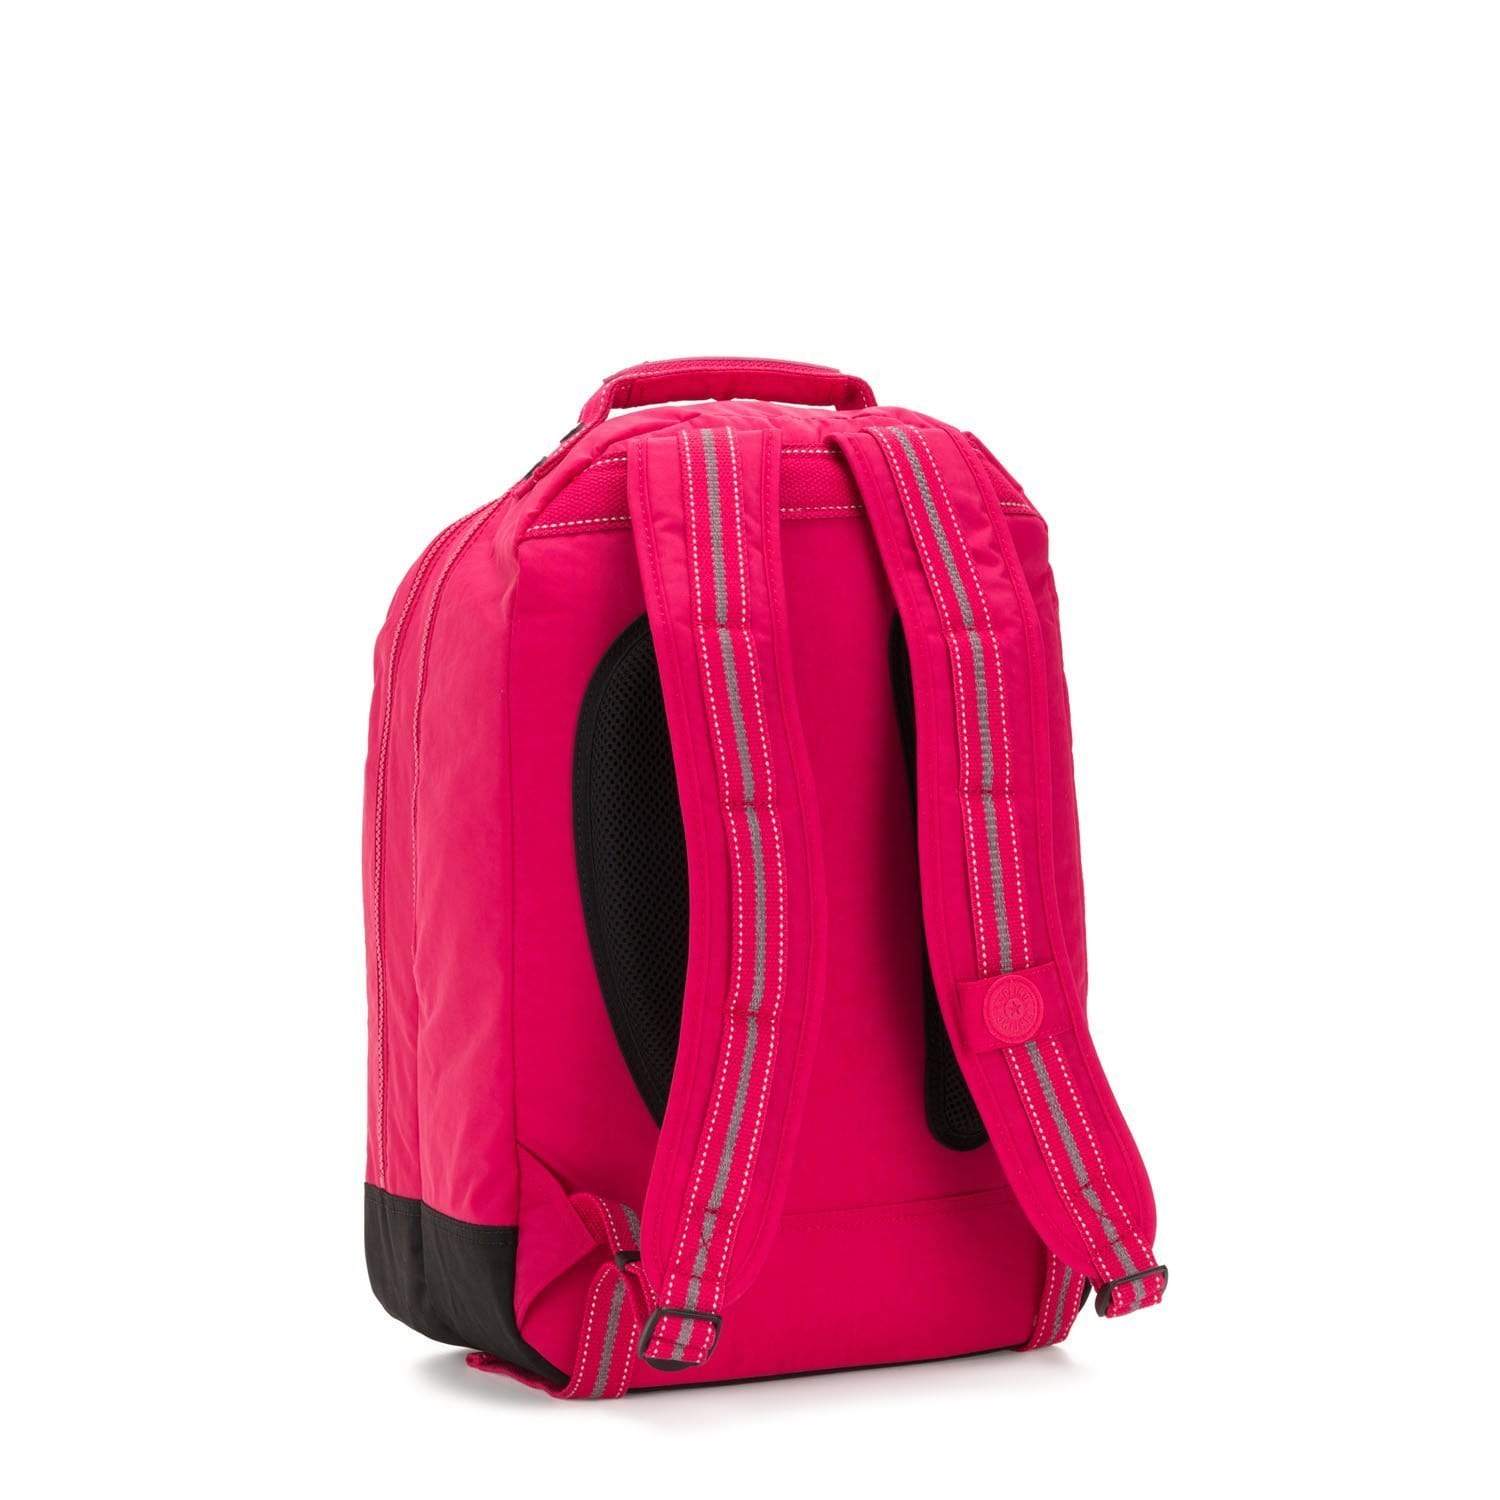 Kipling CLASS ROOM School Accessories - True Pink - I4053-09F - Jashanmal Home